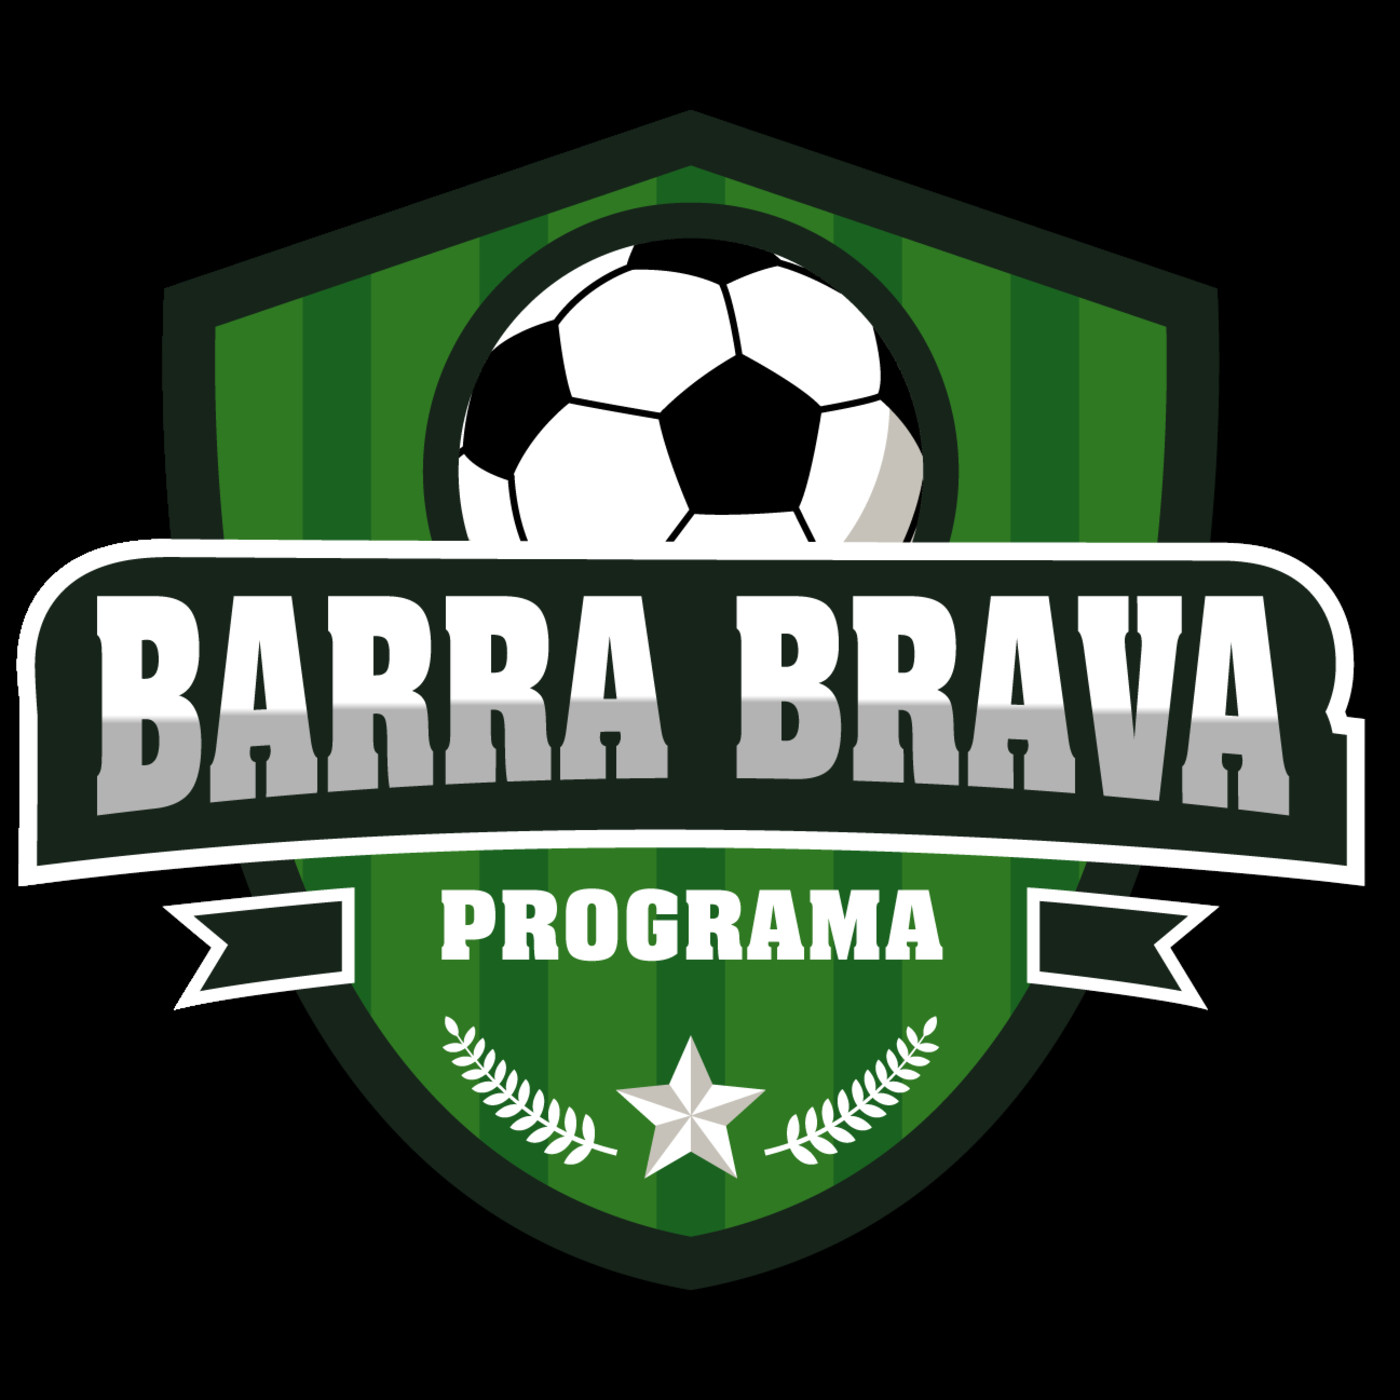 16. Podcast BARRA BRAVA Programa 29 de julio de 2019